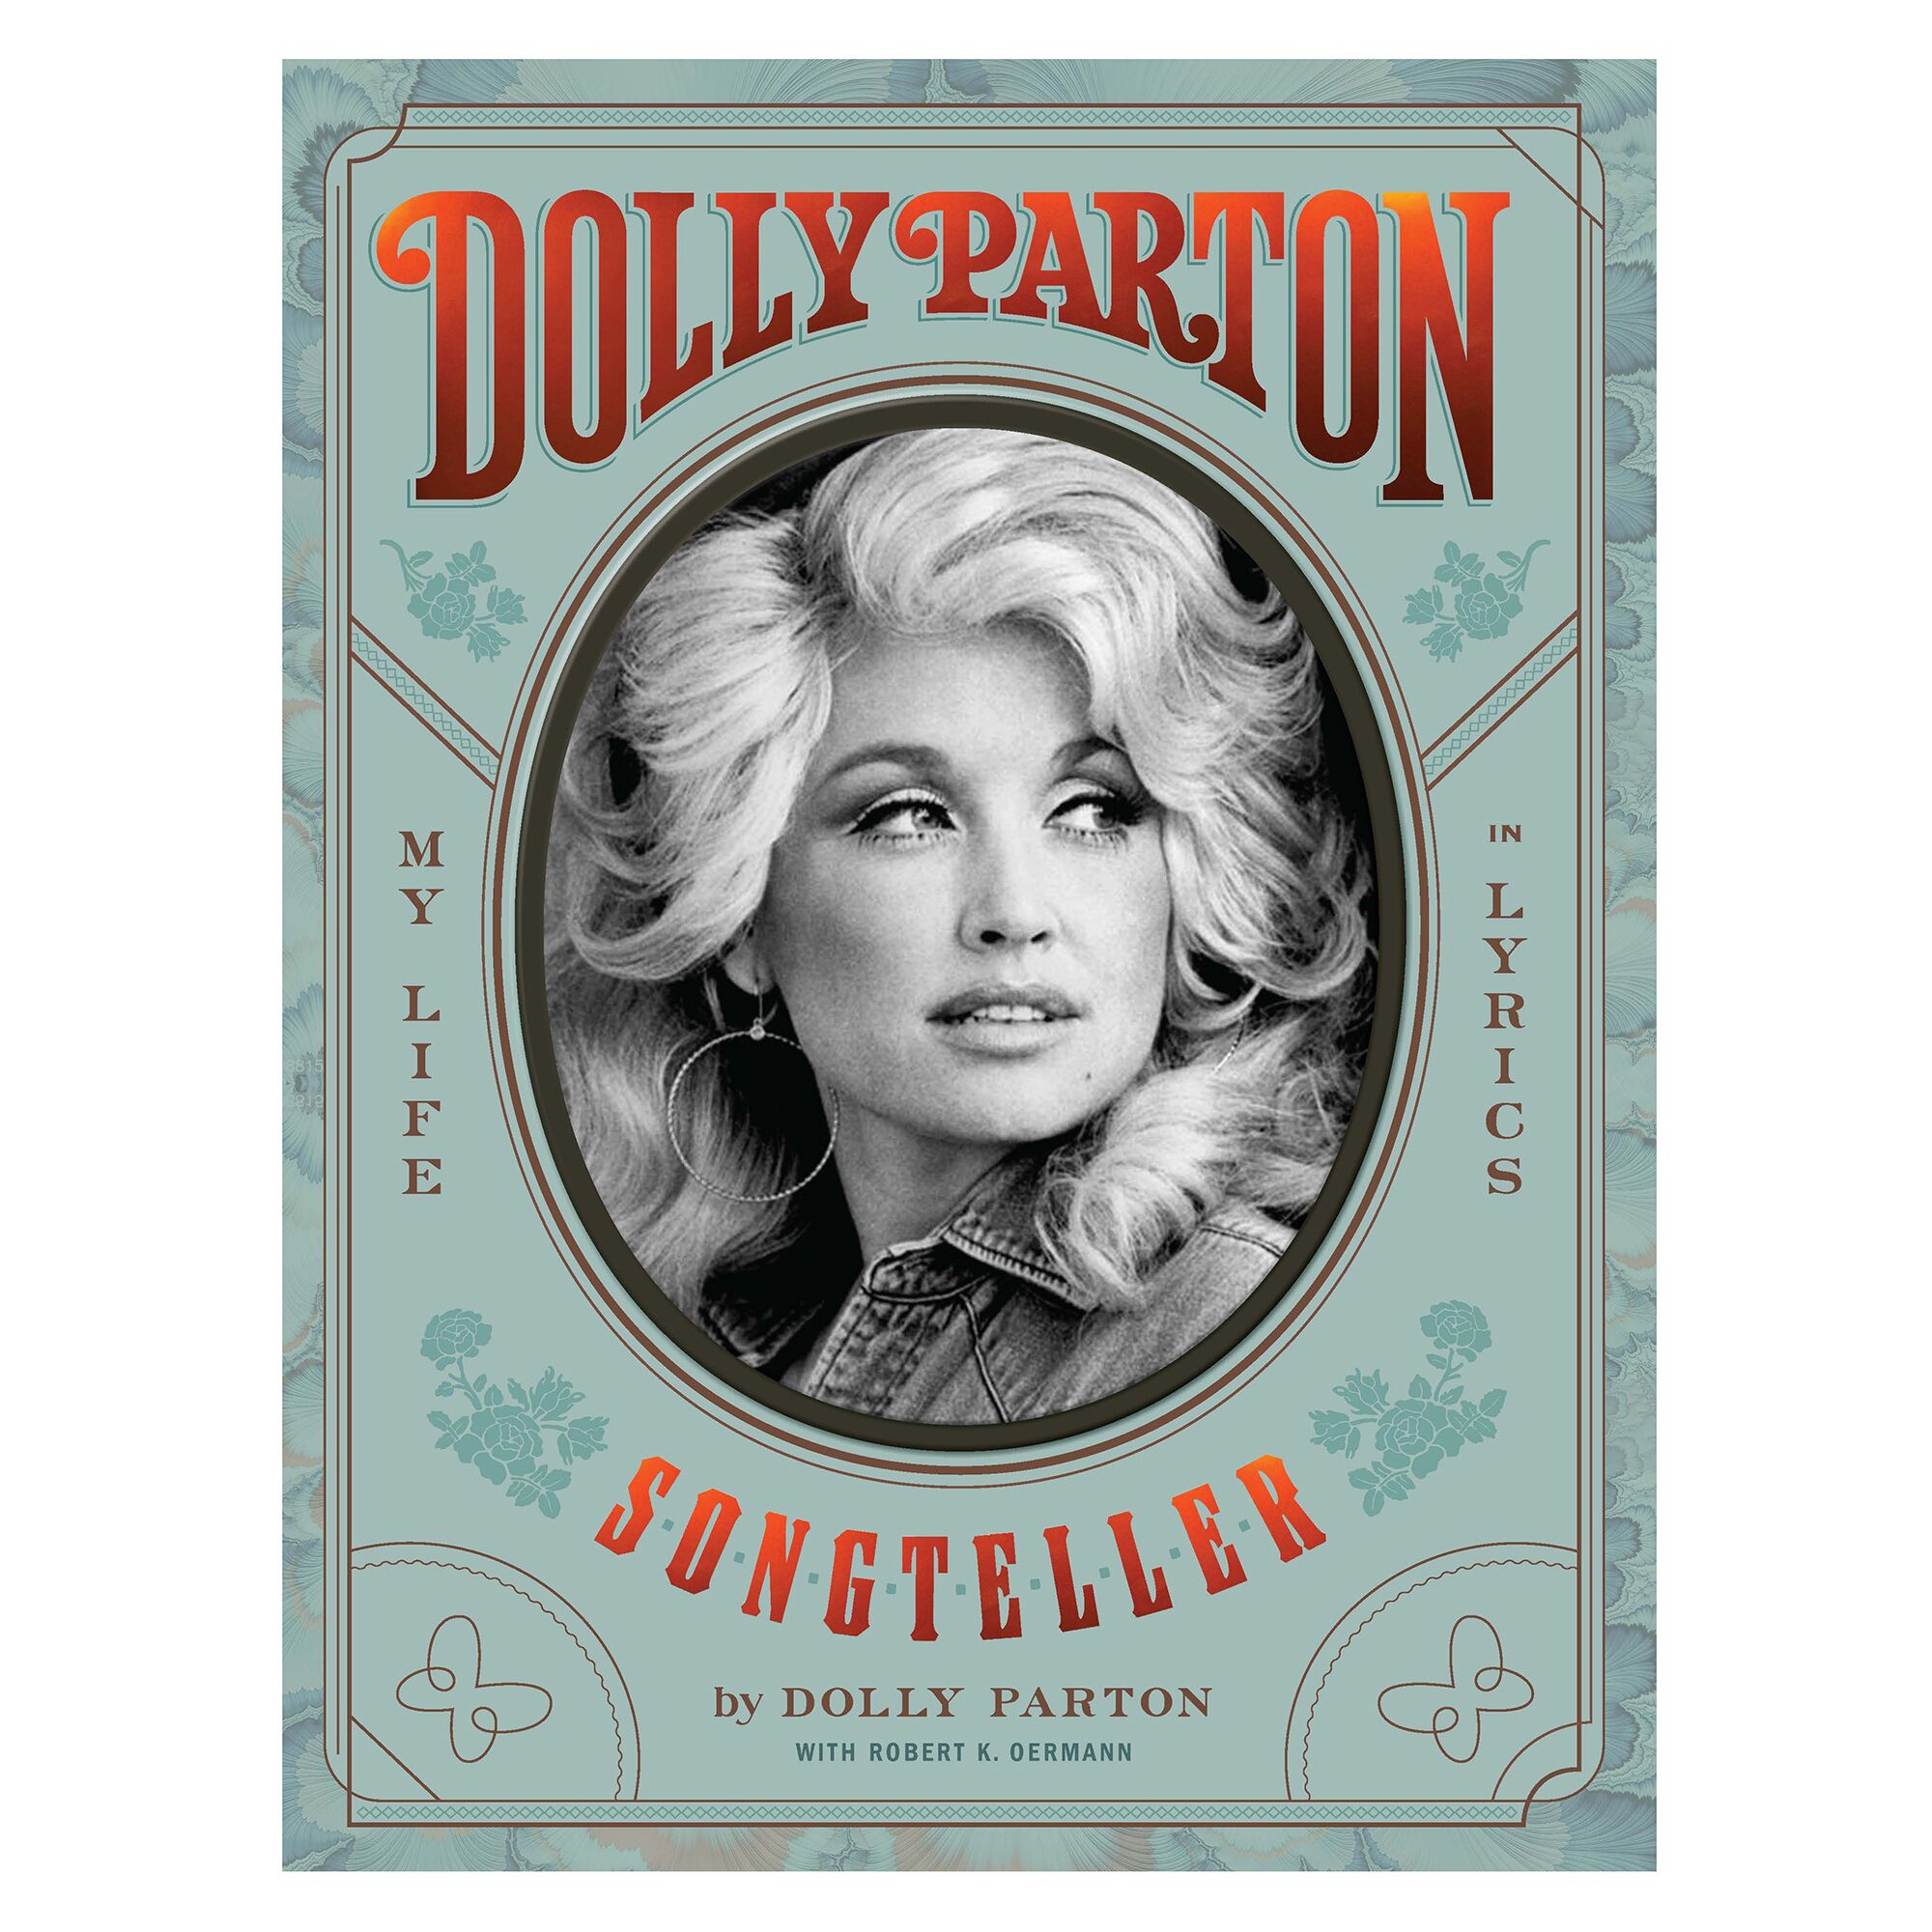 Dolly Parton, "Songteller: My Life in Lyrics" 